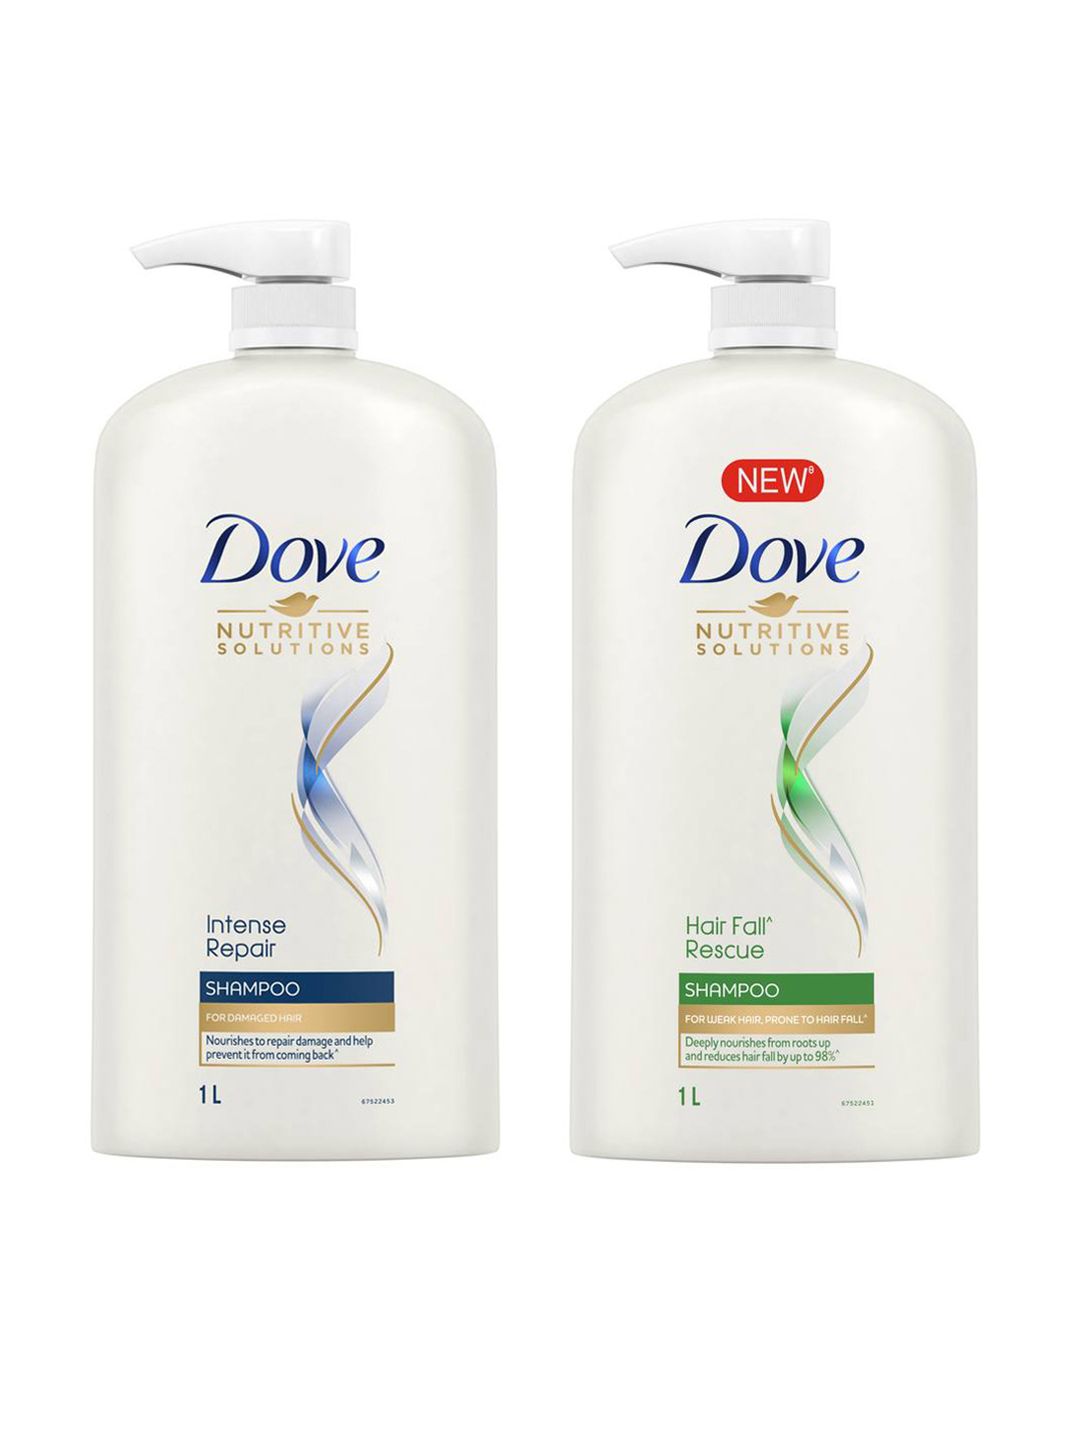 Dove Hair Fall Rescue Shampoo & Intense Repair Shampoo Price in India